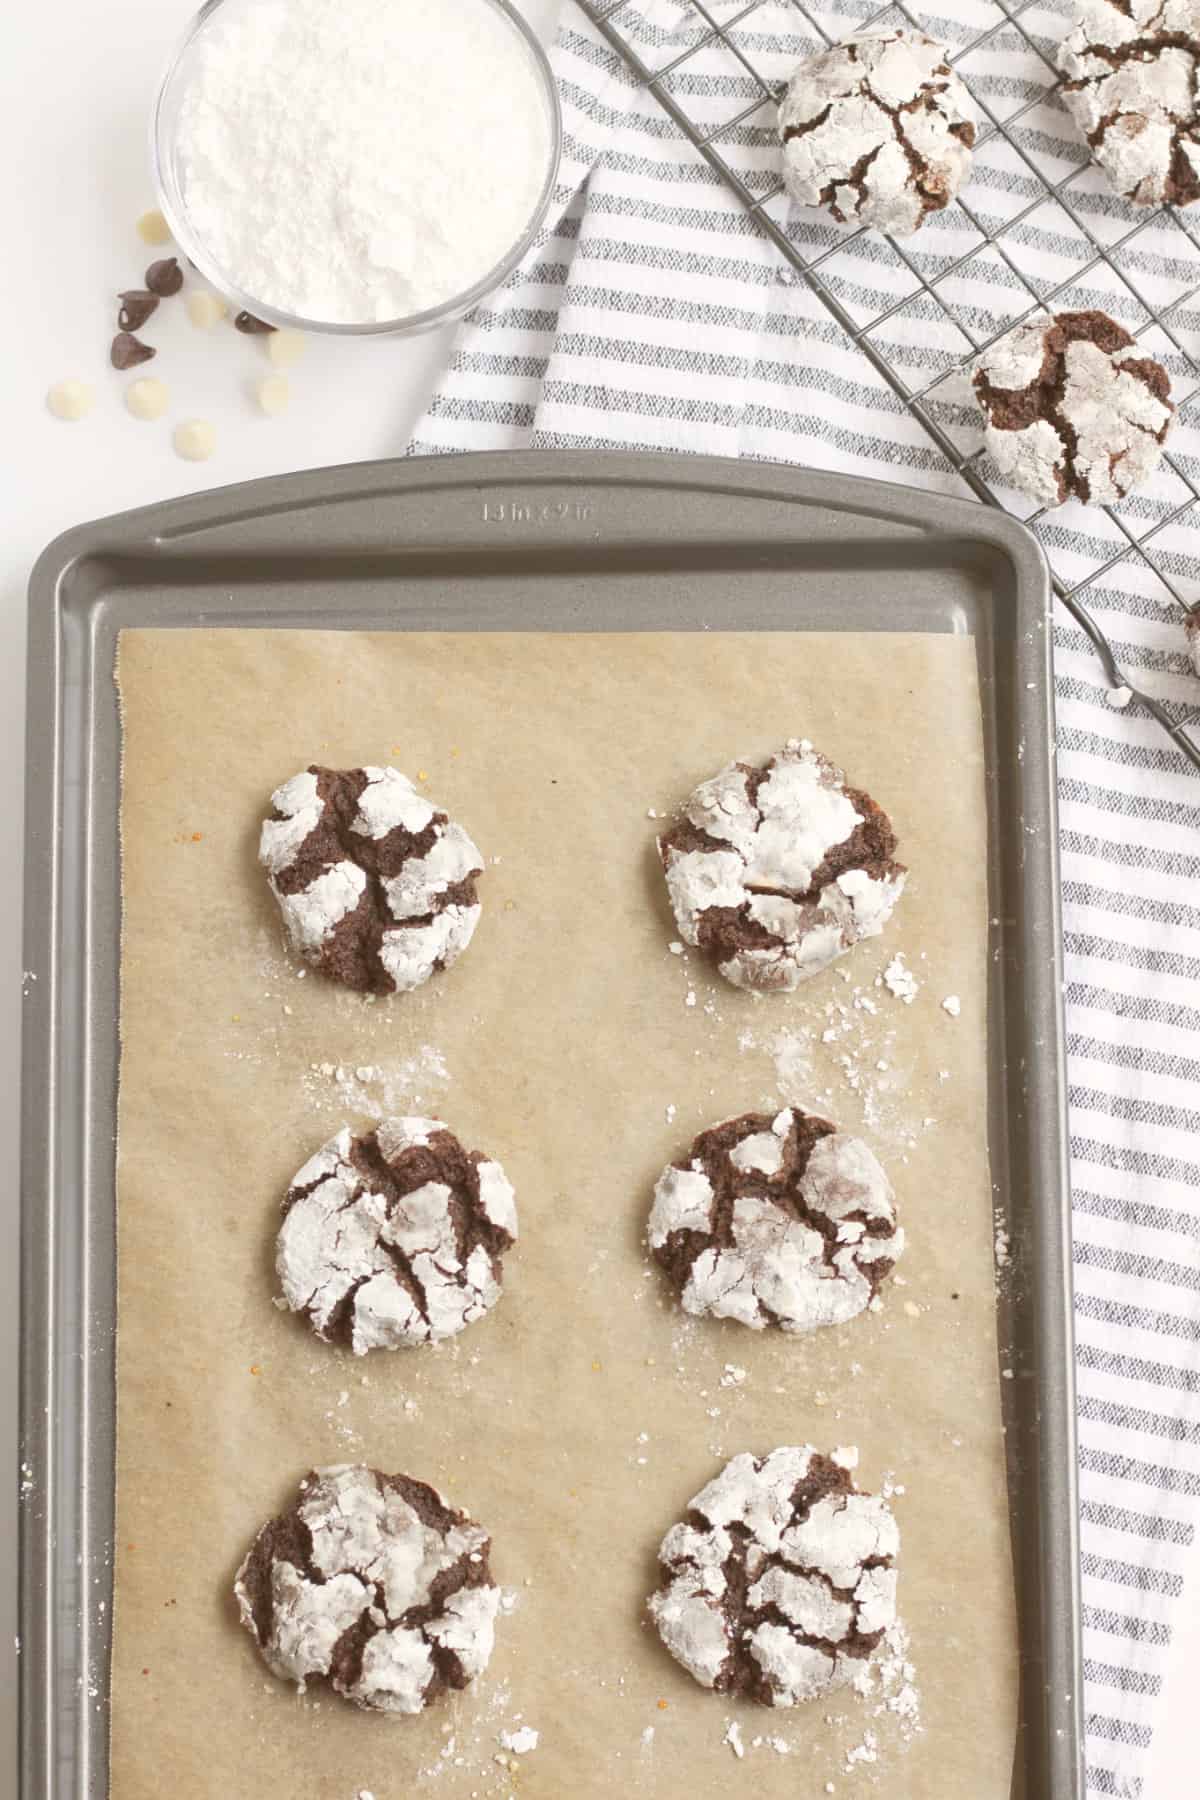 baked crinkle cookies on a cookie sheet.